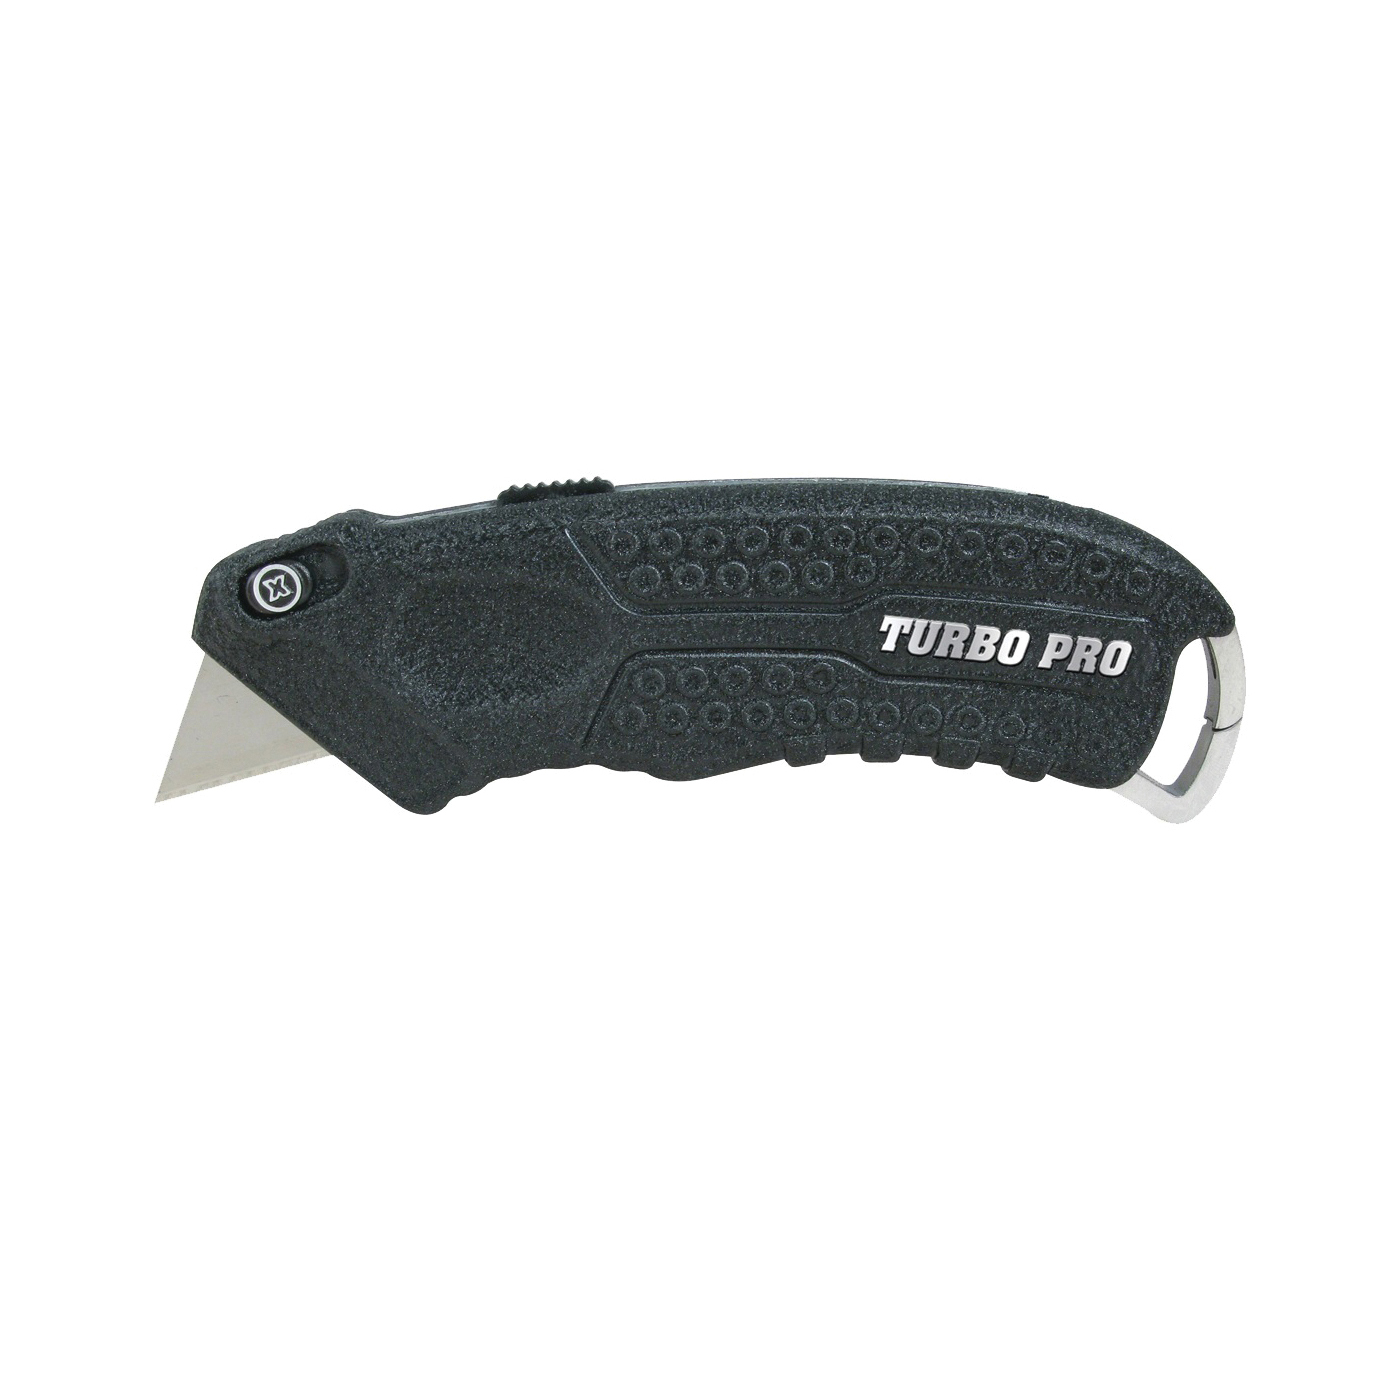 33-187 Turbo Knife, 0.87 in L Blade, 4.13 in W Blade, Ergonomic Handle